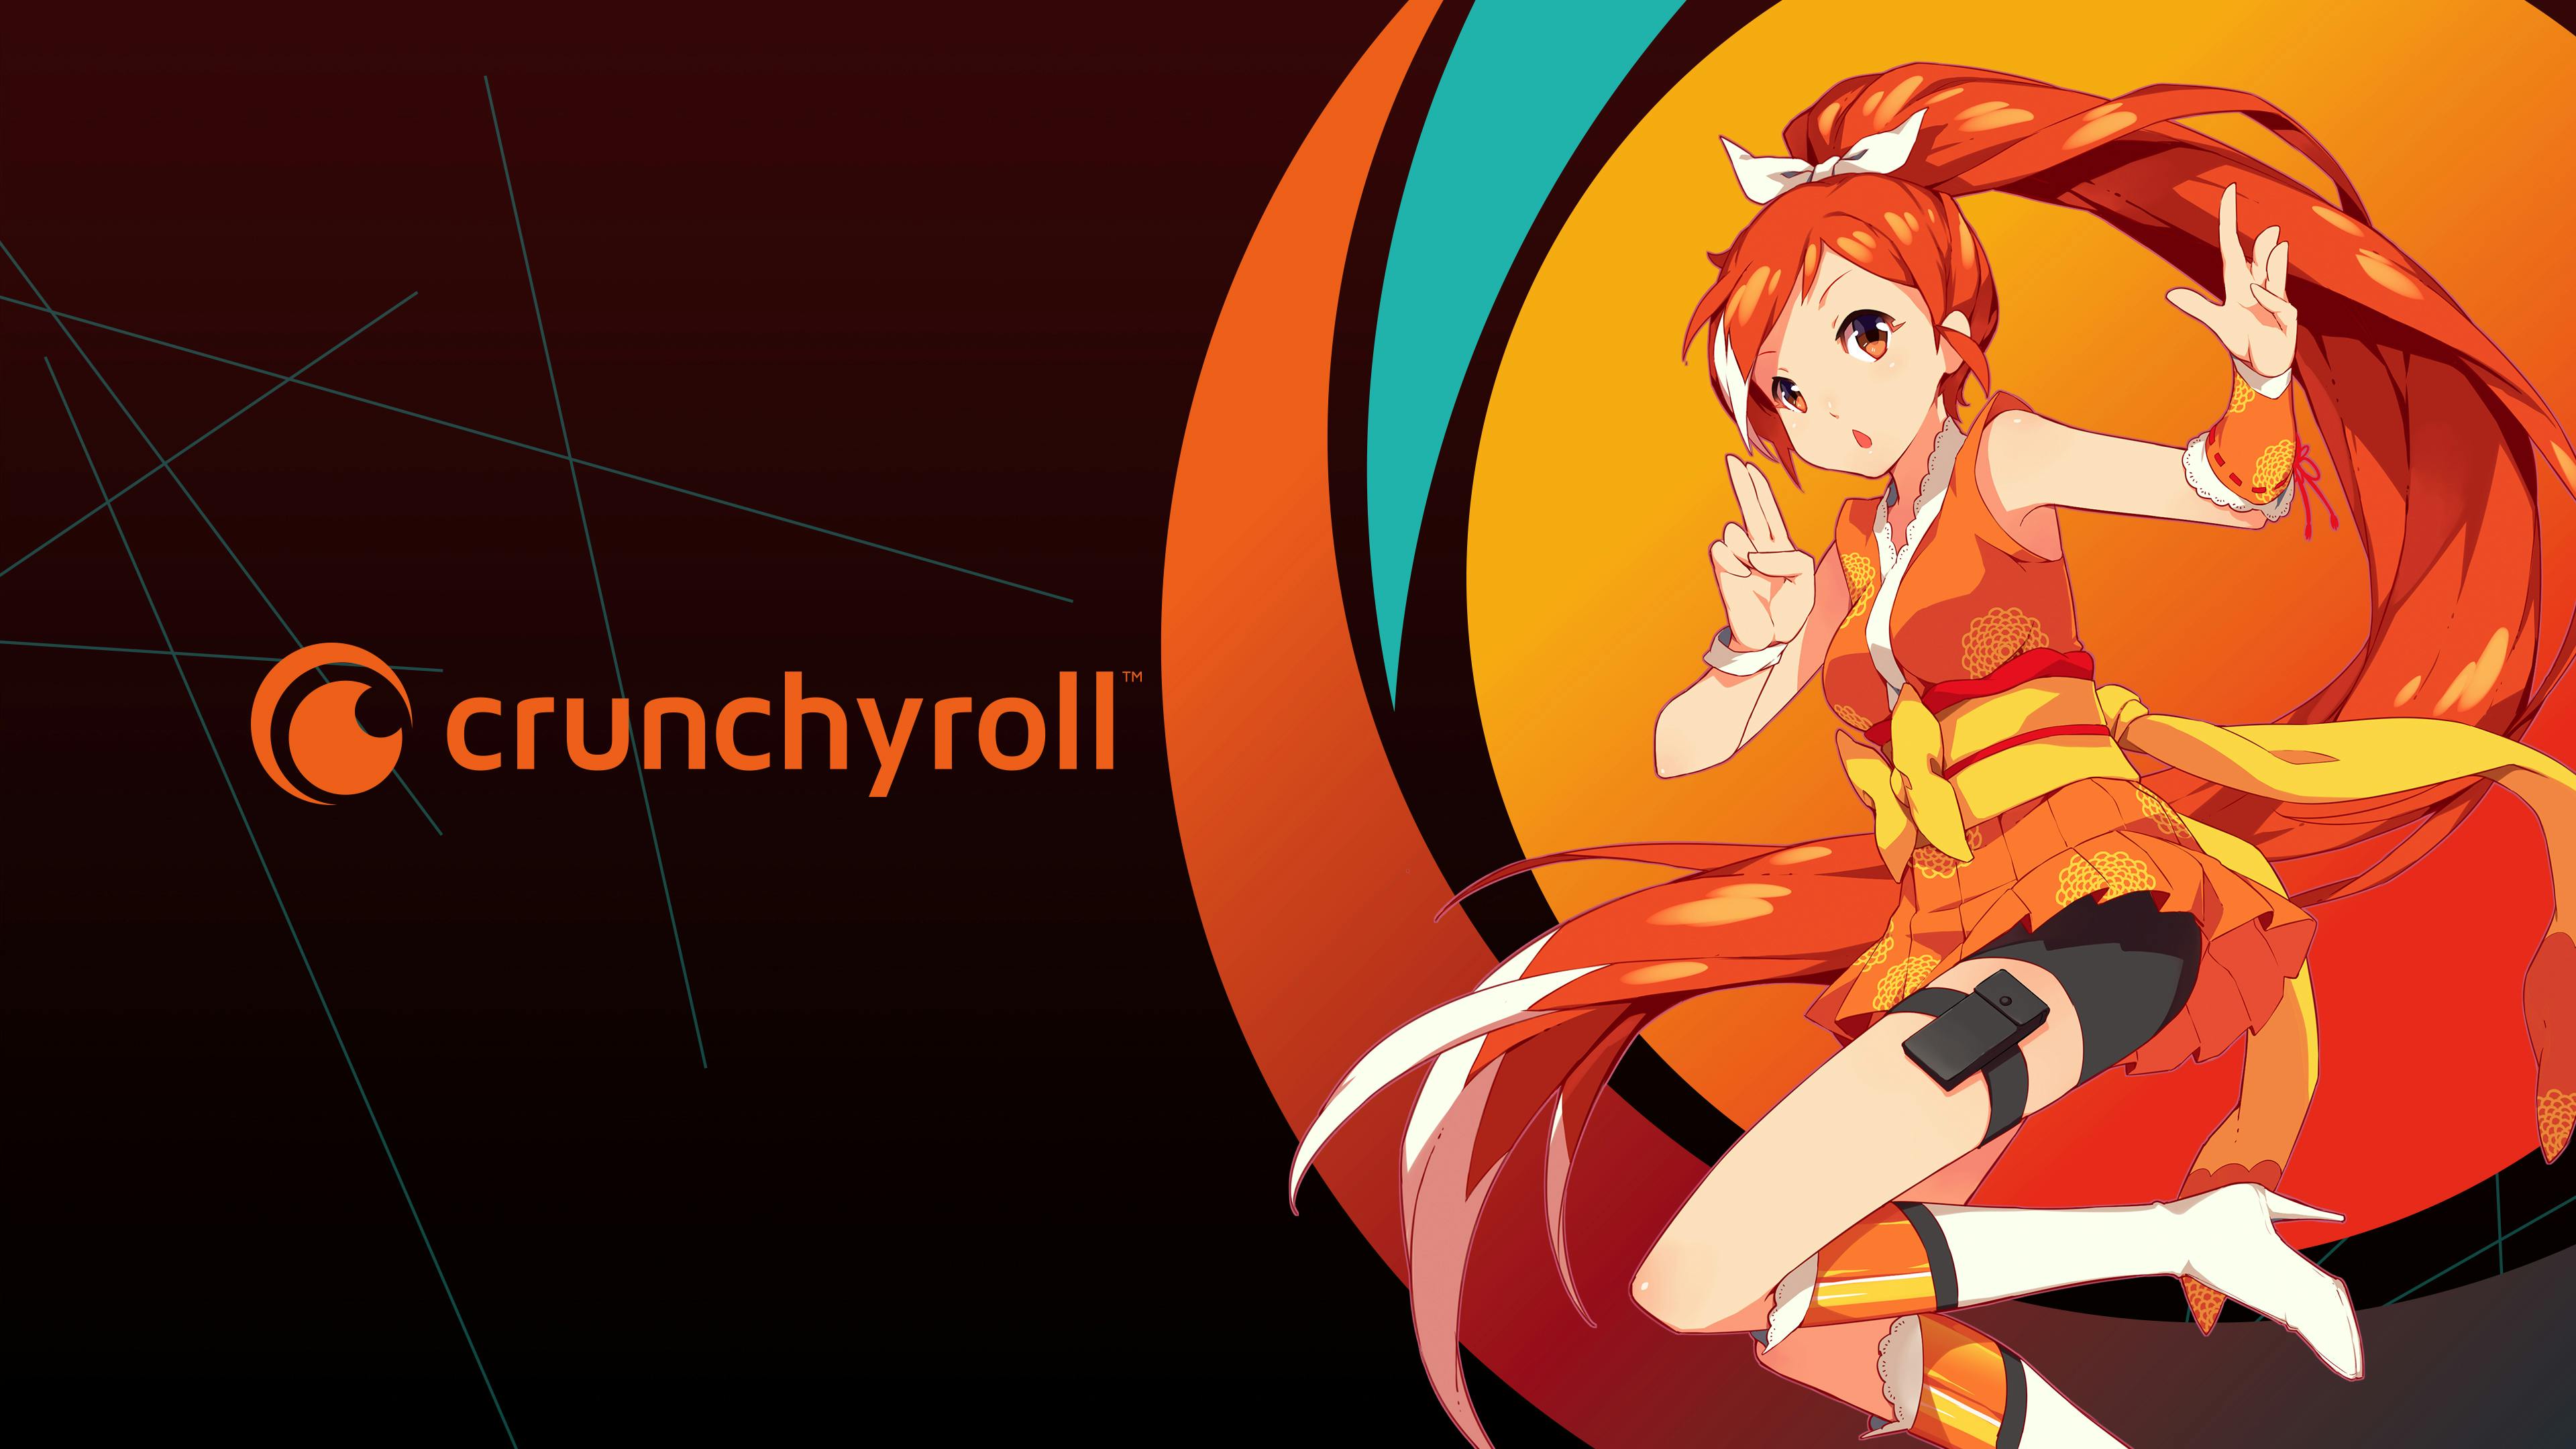 Crunchyroll ad with anime woman